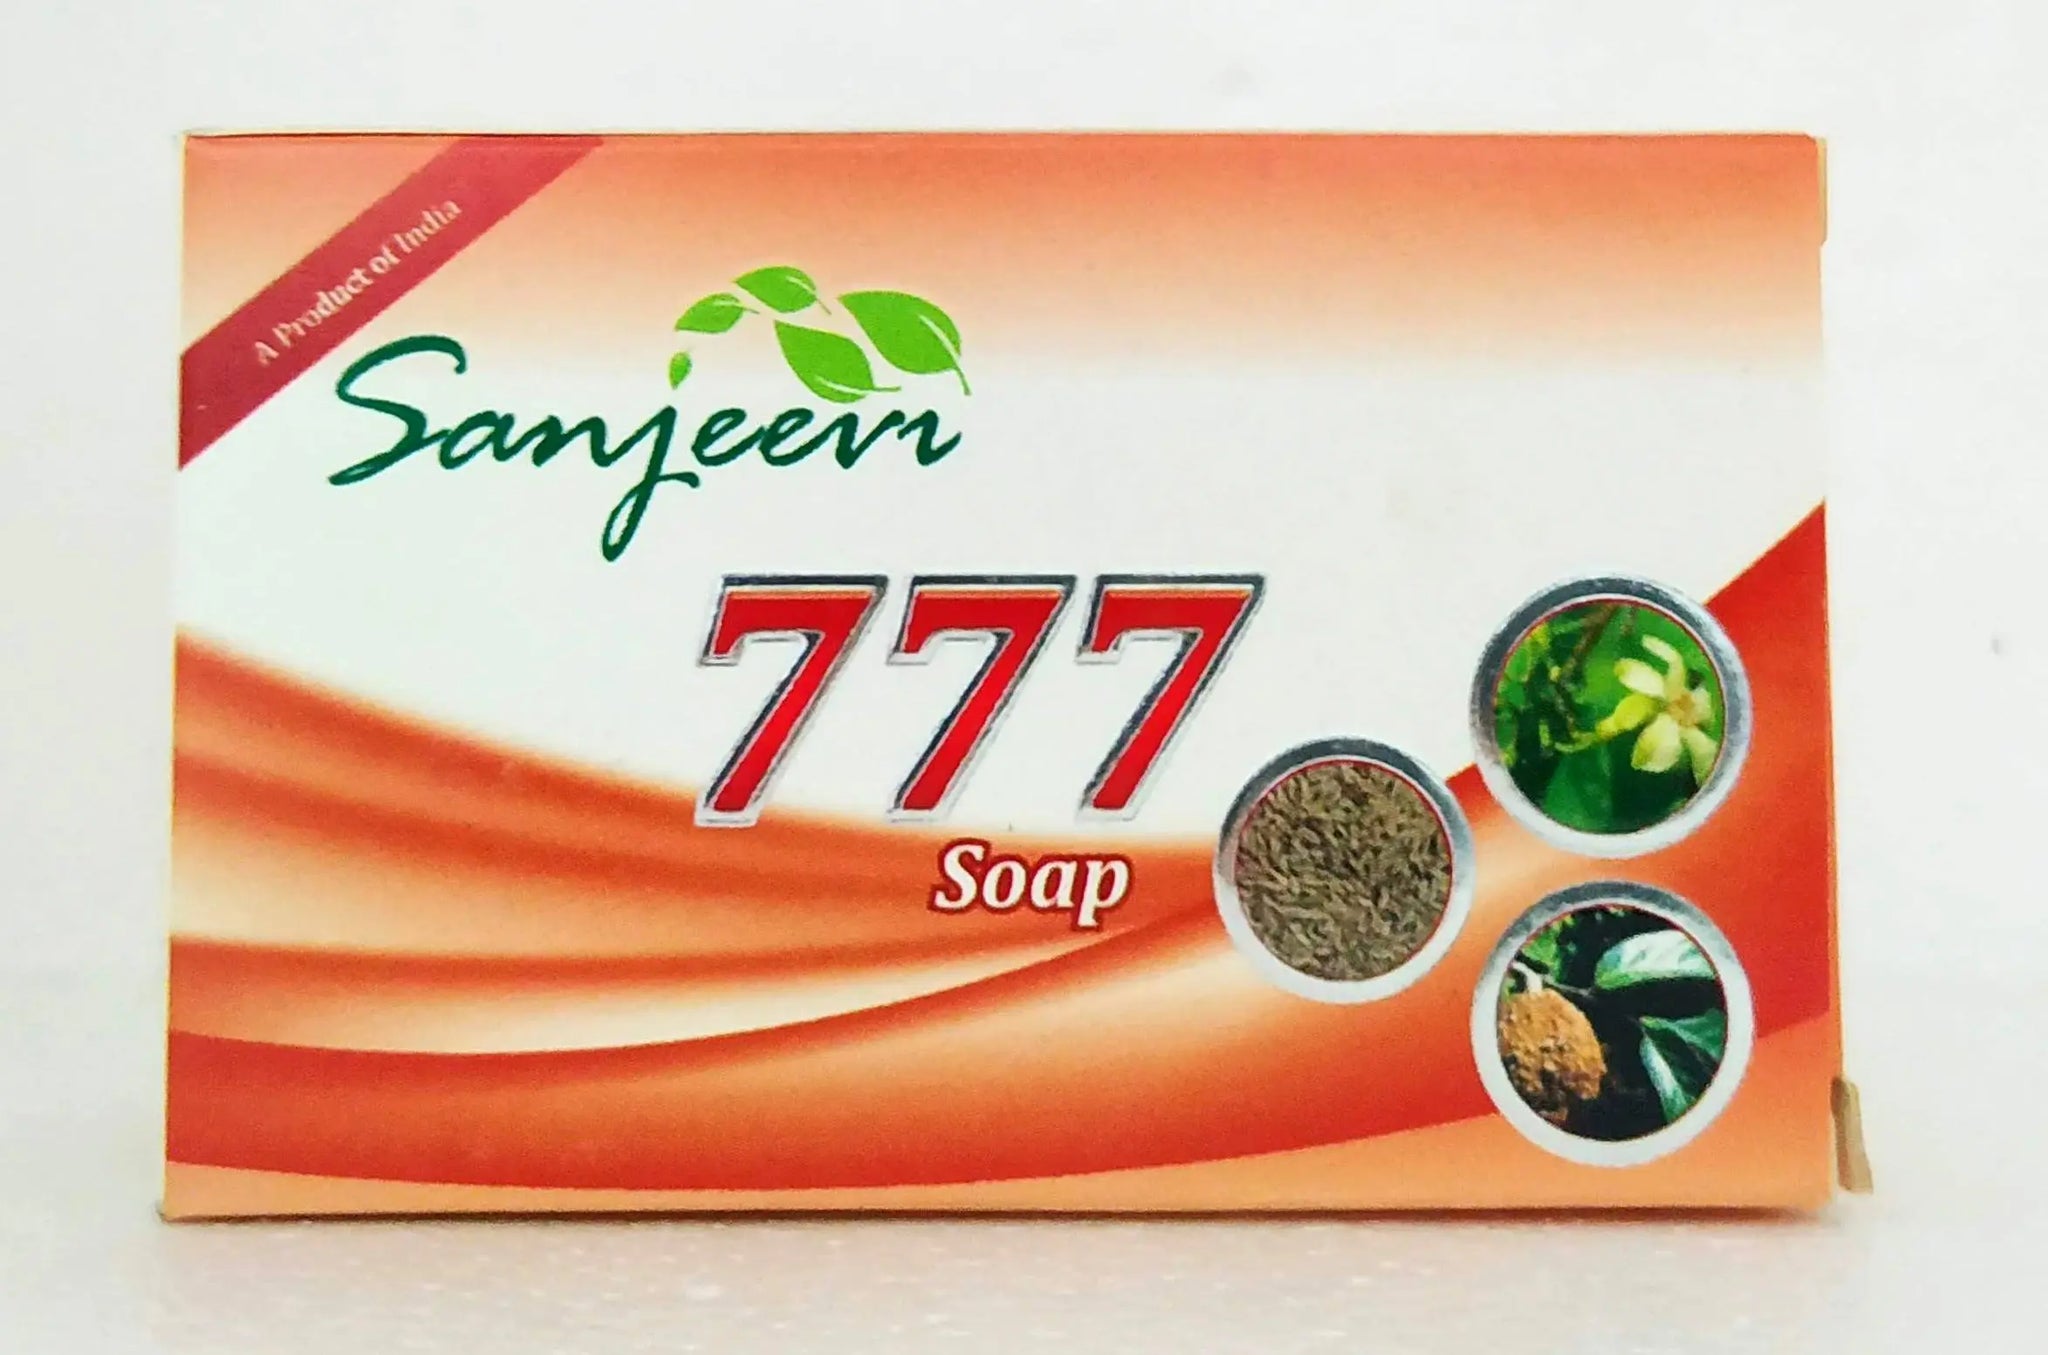 Sanjeevi 777 Soap 75gm Sanjeevi